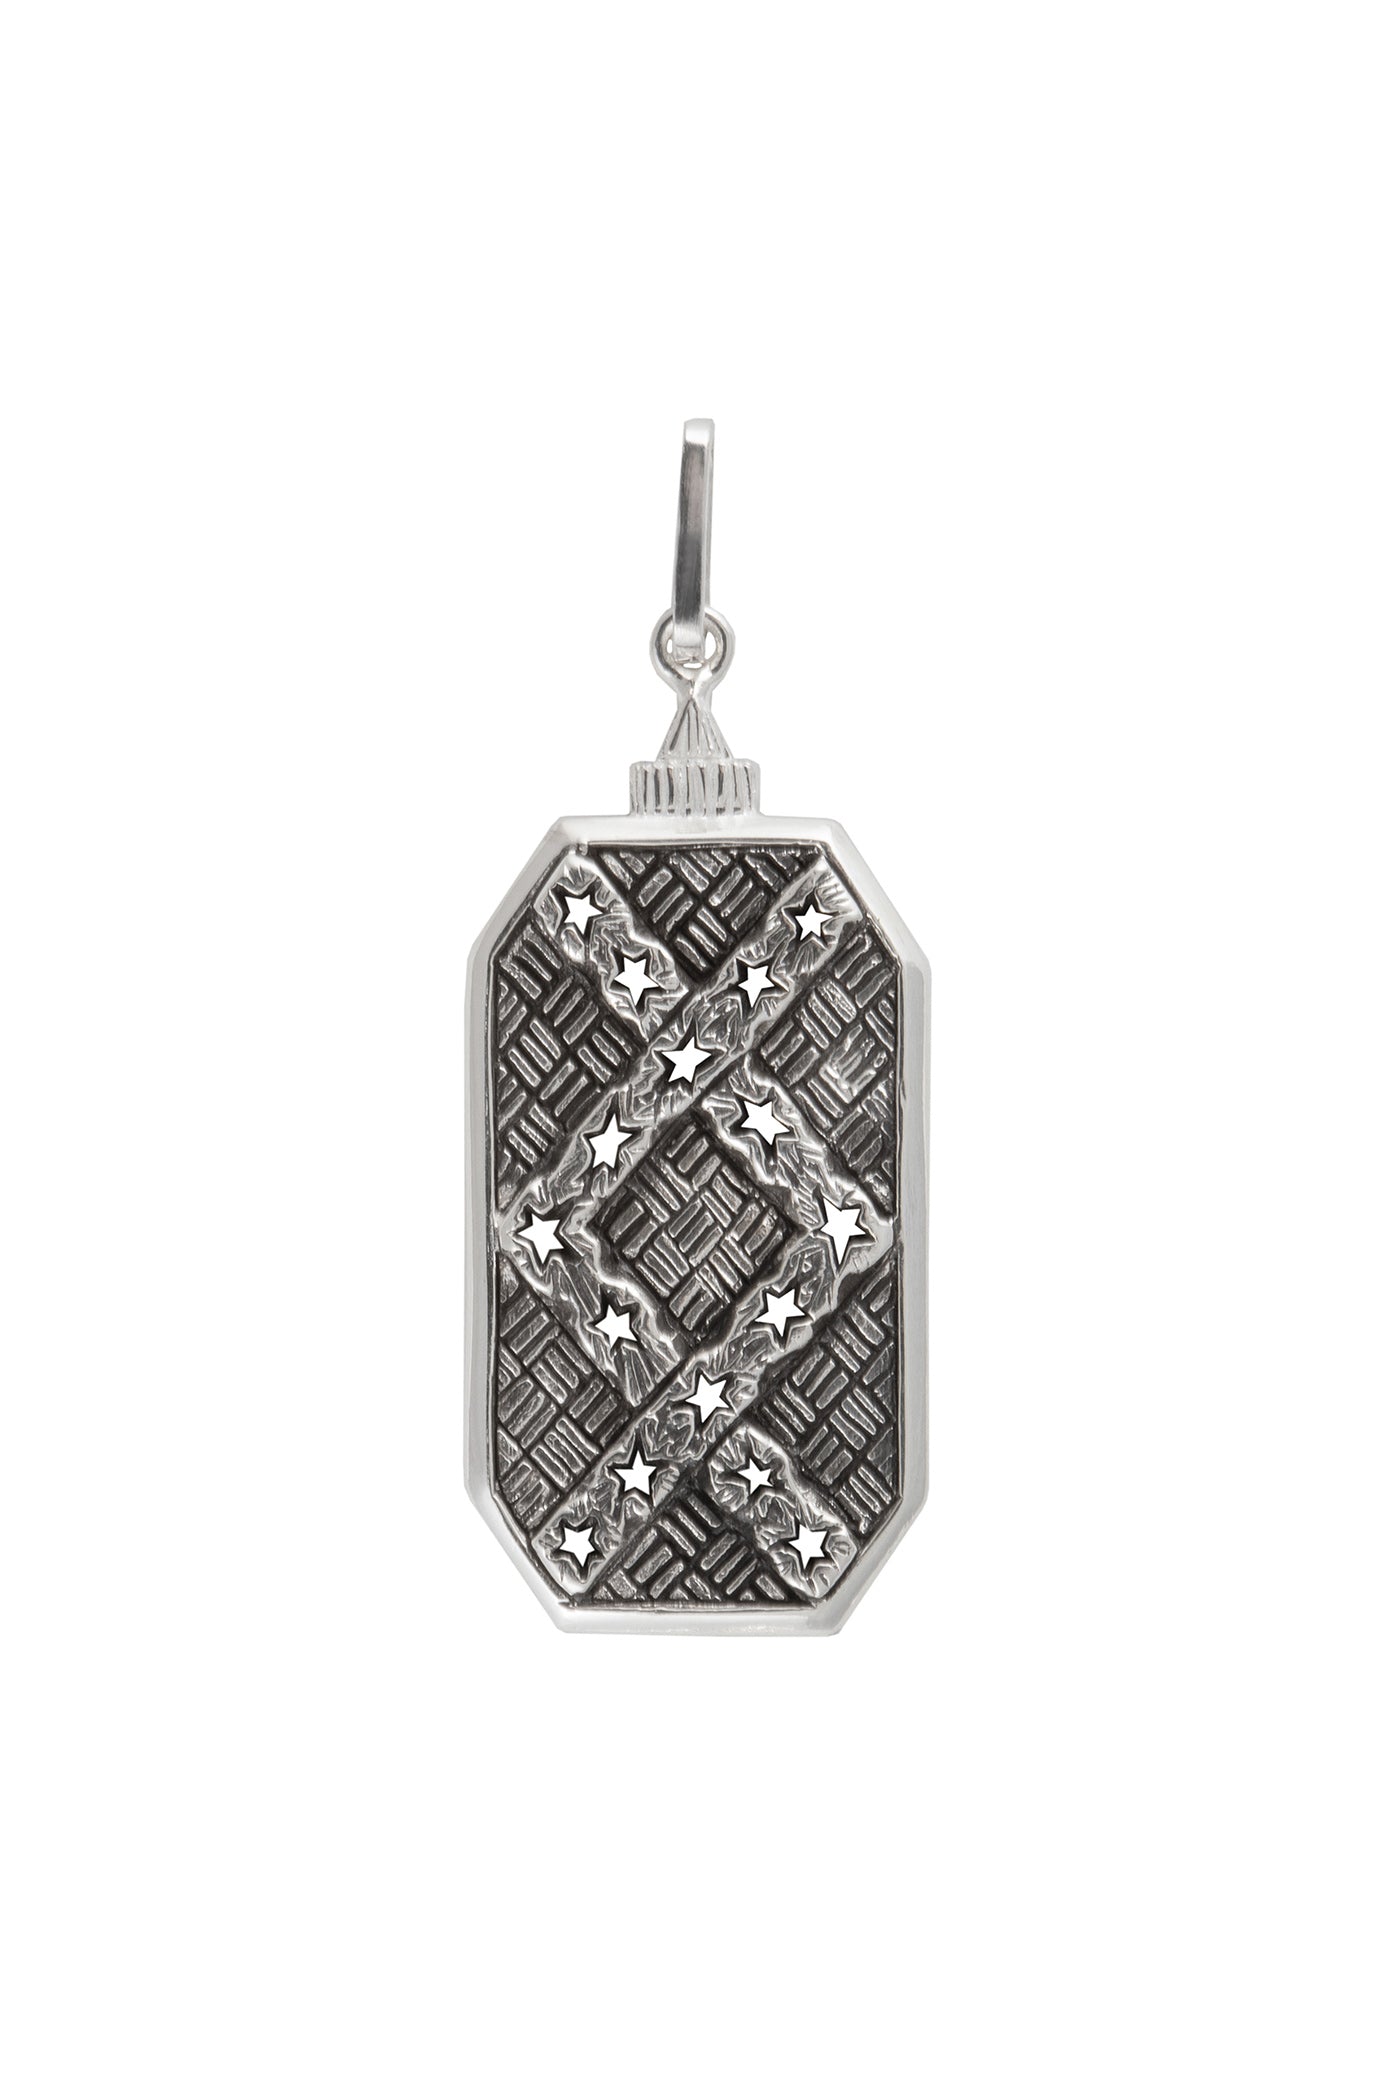 Inguz power men's pendant. Silver, oxide